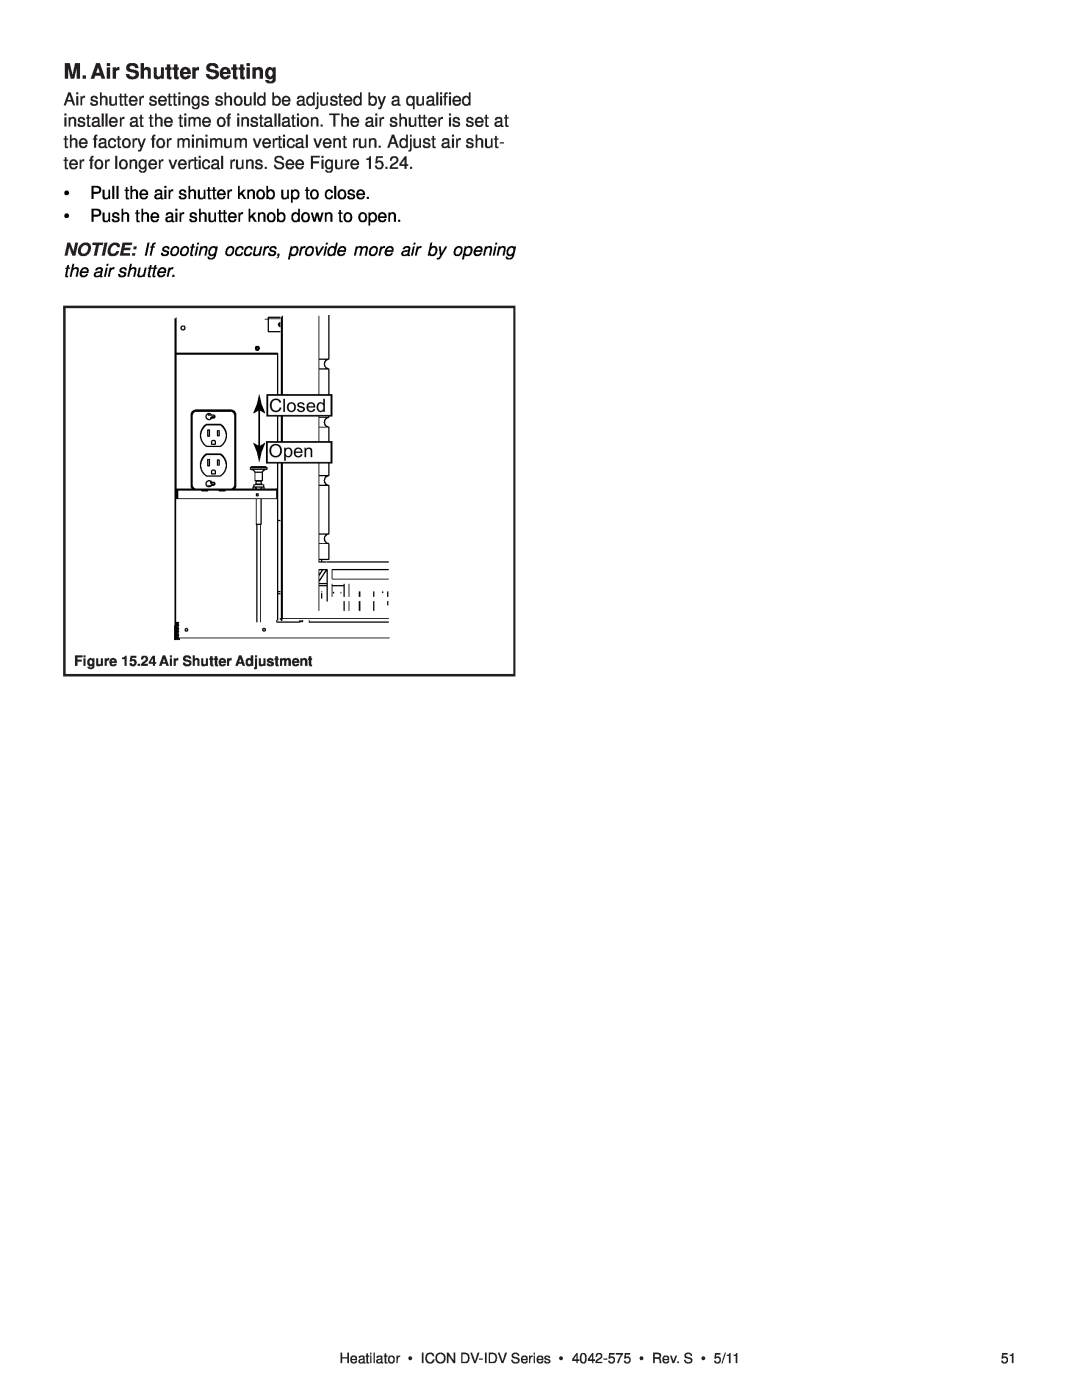 Heatiator IDV4833IT owner manual M. Air Shutter Setting, Open 